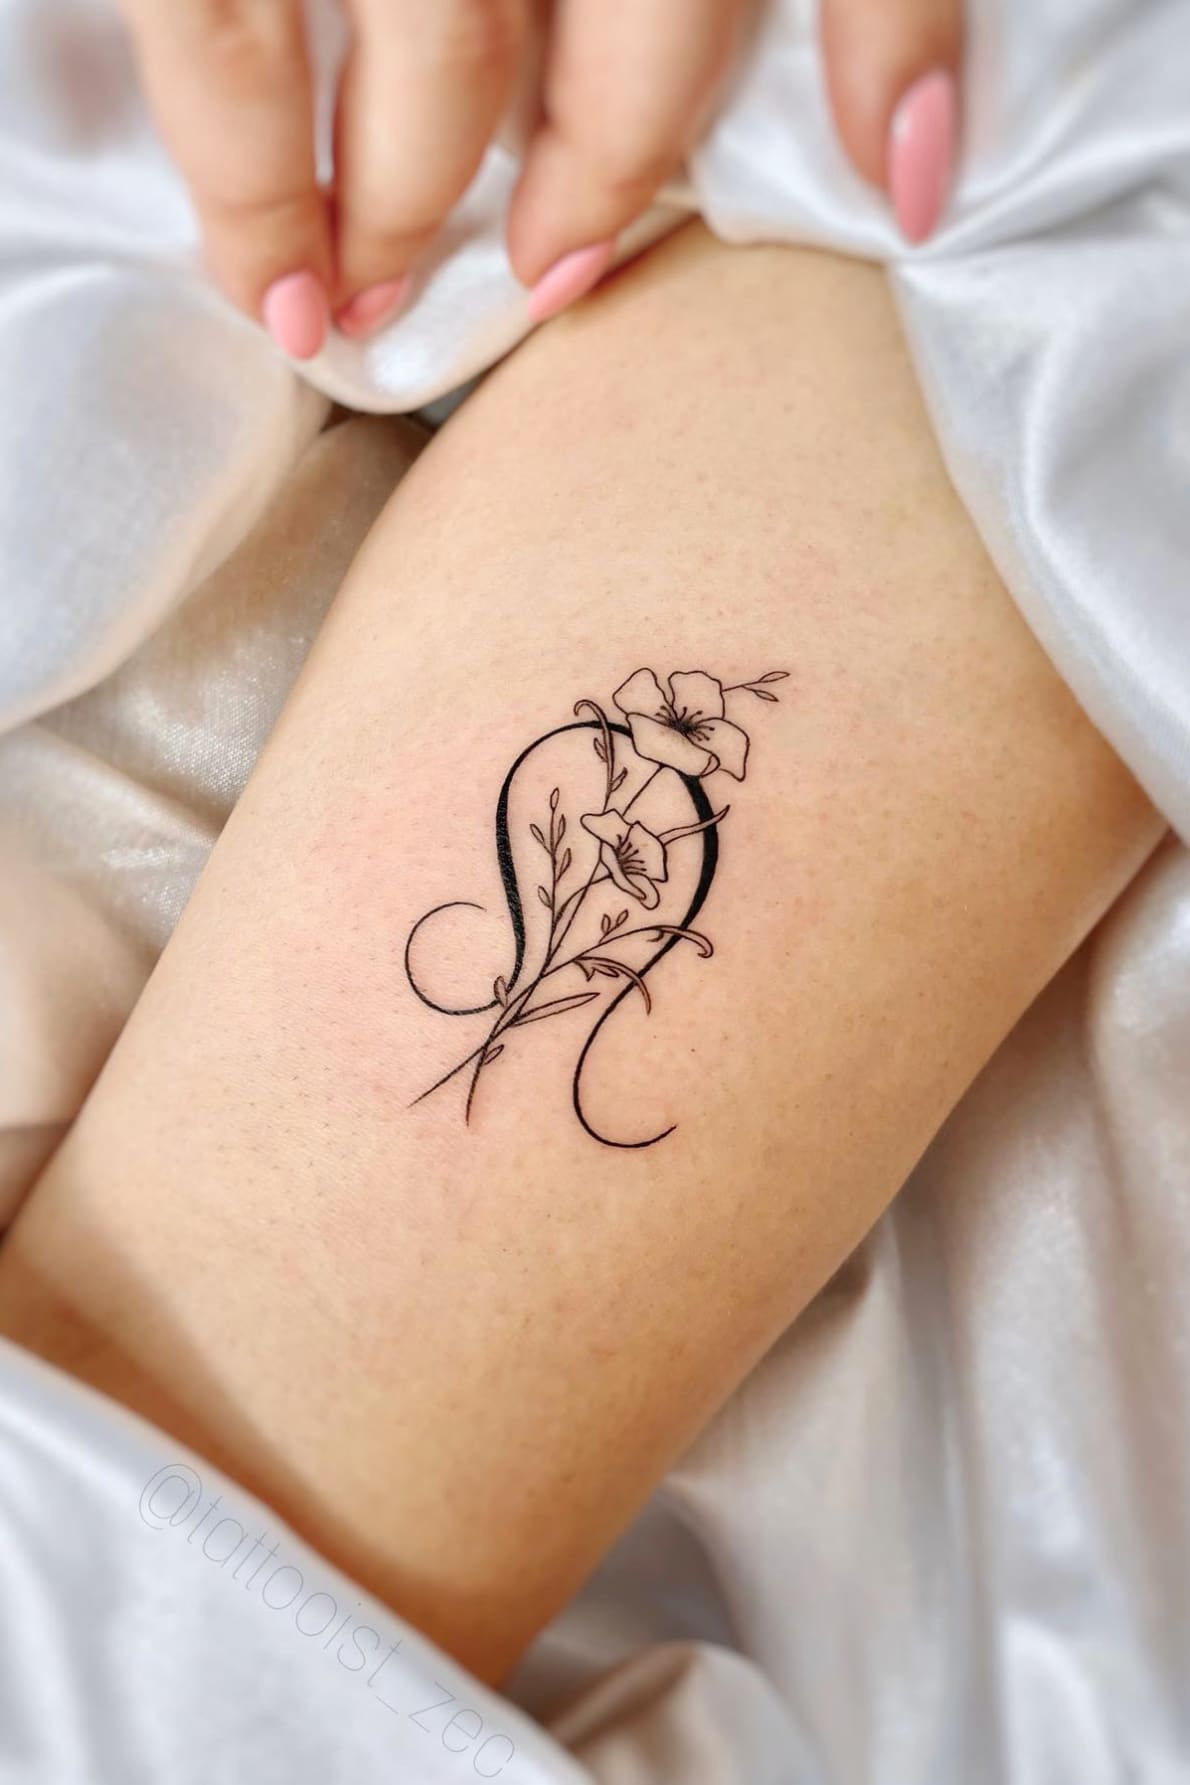 Leo Tattoo With Flower